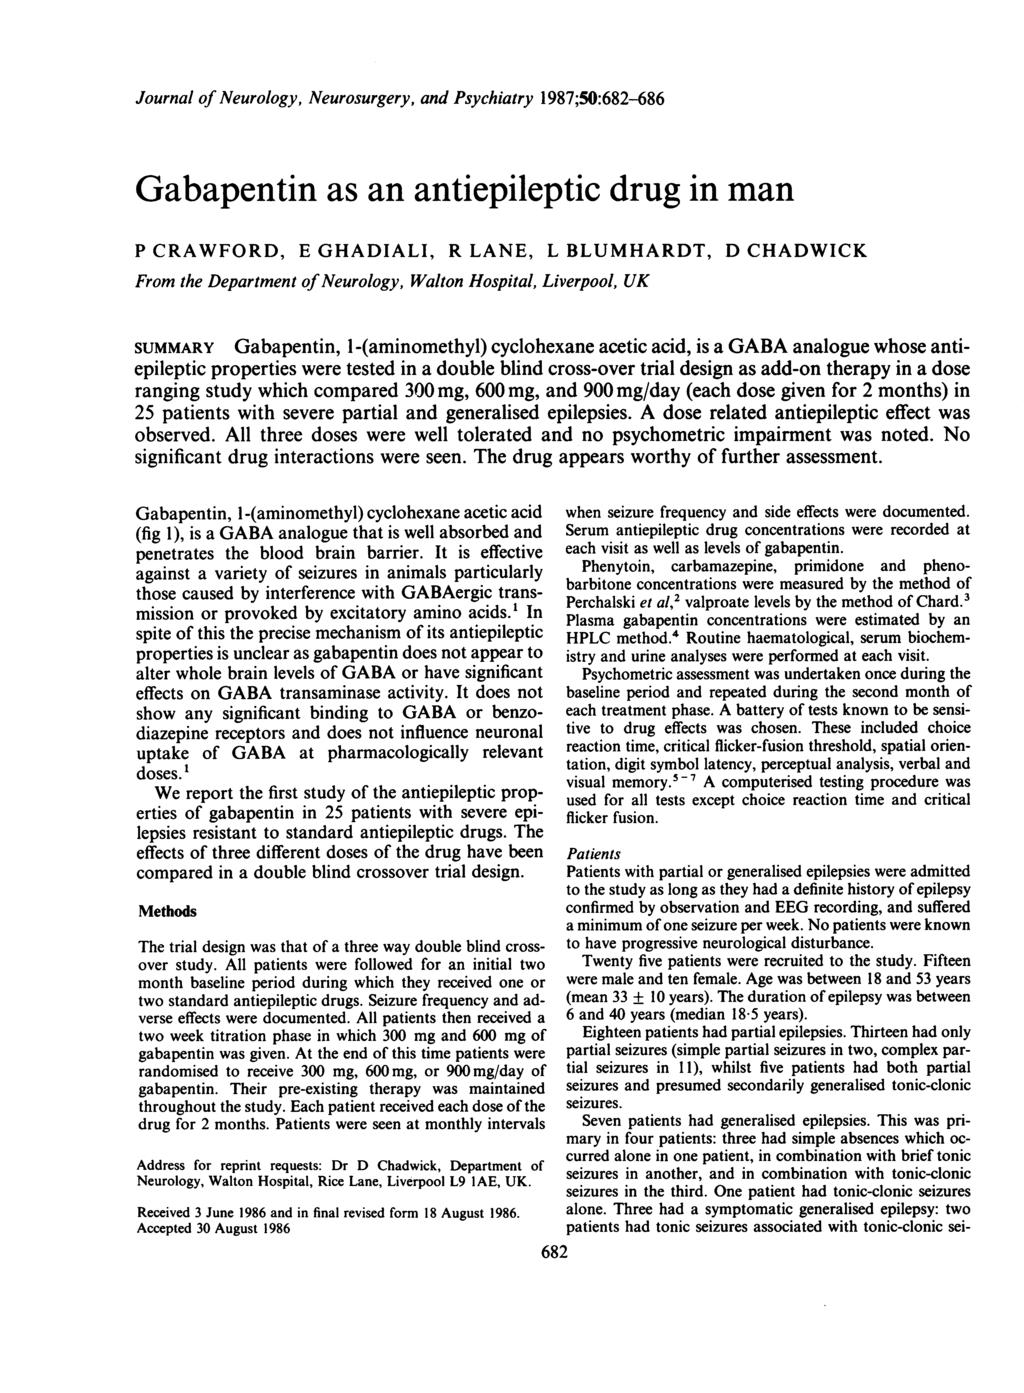 Journal of Neurology, Neurosurgery, and Psychiatry 1987;50:682-686 Gabapentin as an antiepileptic drug in man P CRAWFORD, E GHADAL, R LANE, L BLUMHARDT, D CHADWCK From the Department ofneurology,